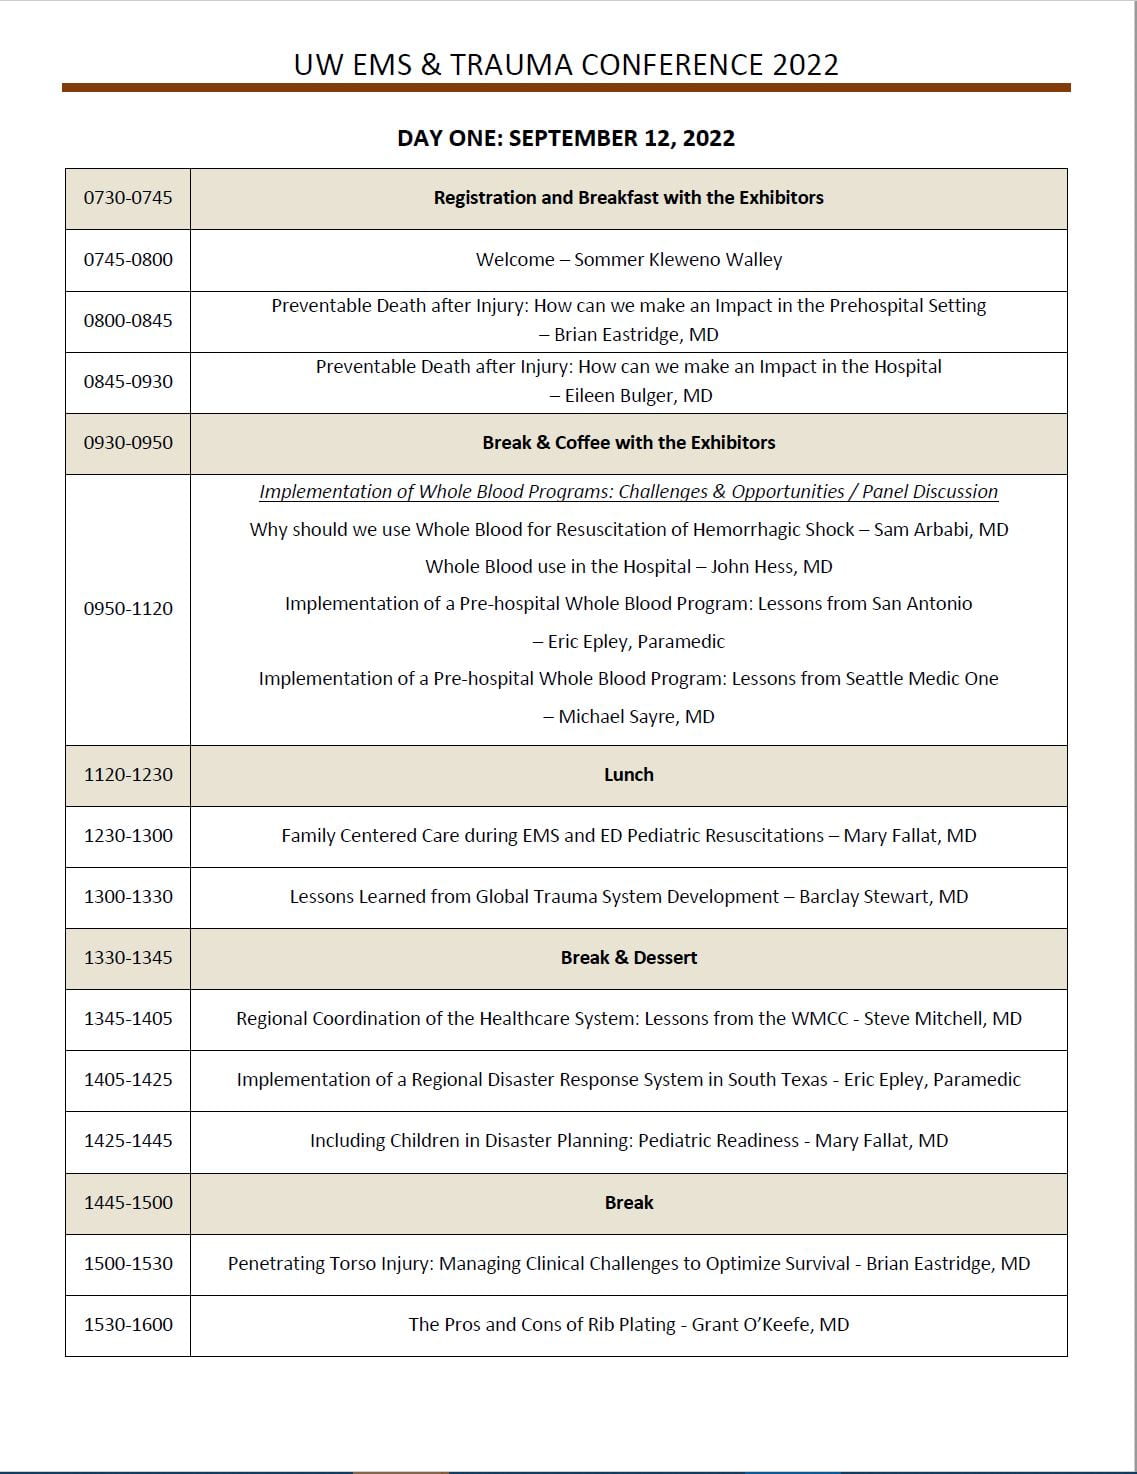 PDF Download - UW EMS & Trauma Conference 2022 - Day 1 Schedule